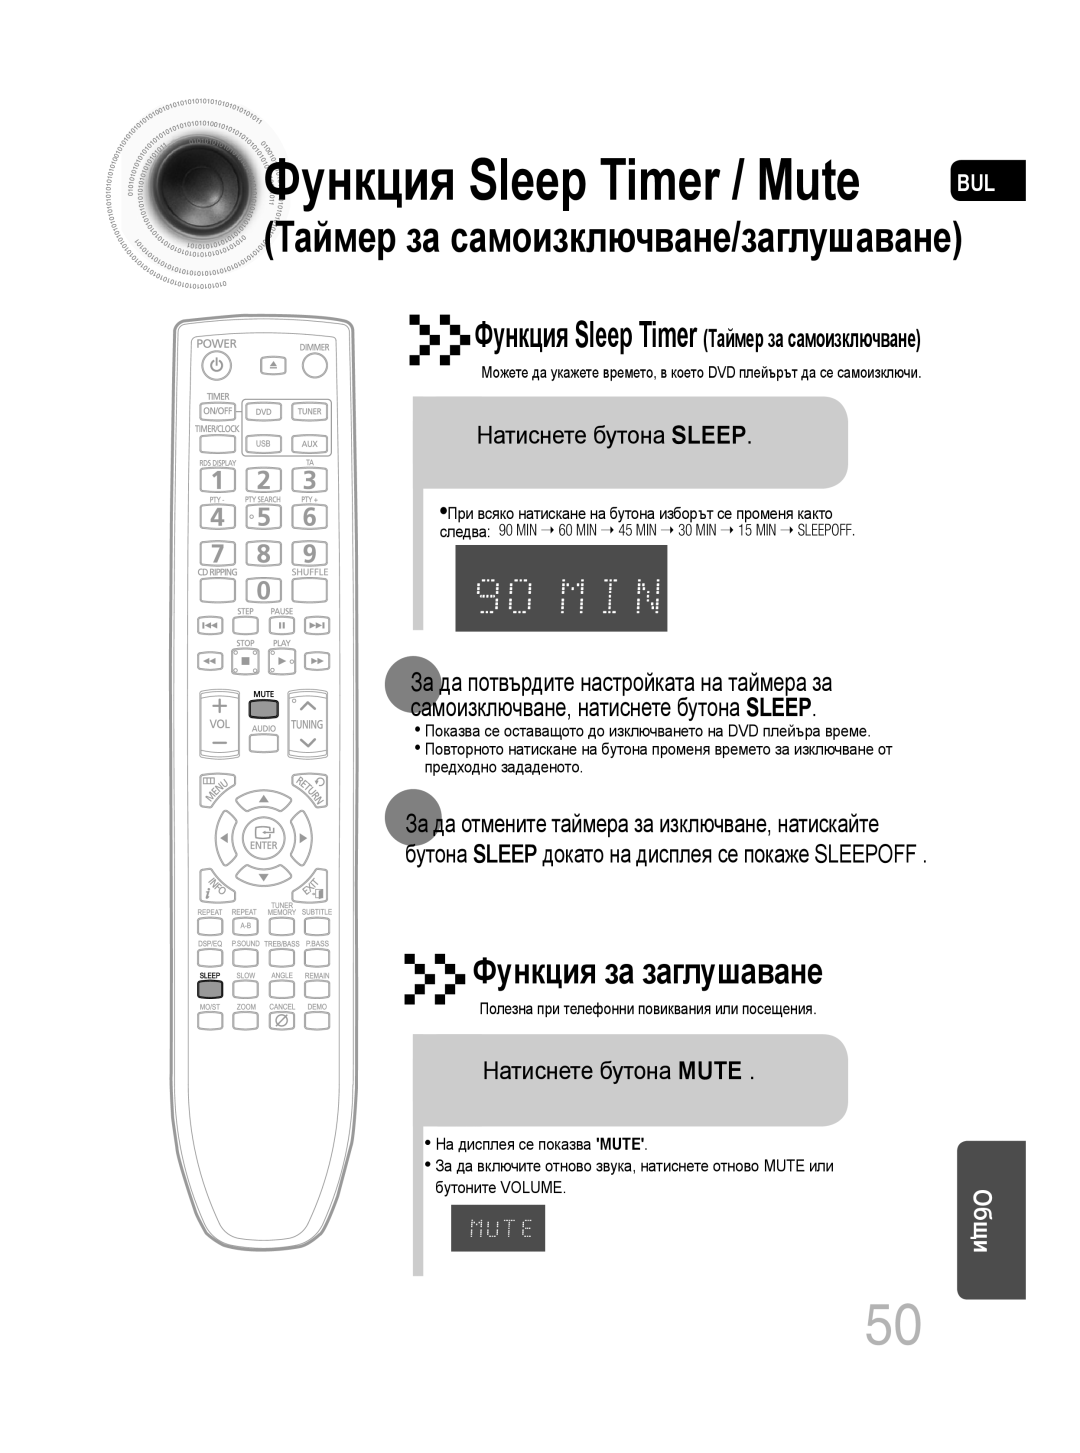 Samsung MM-C330D/EDC manual Таймер за самоизключване/заглушаване, Функция за заглушаване, Натиснете бутона SLEEP, Oбщи 